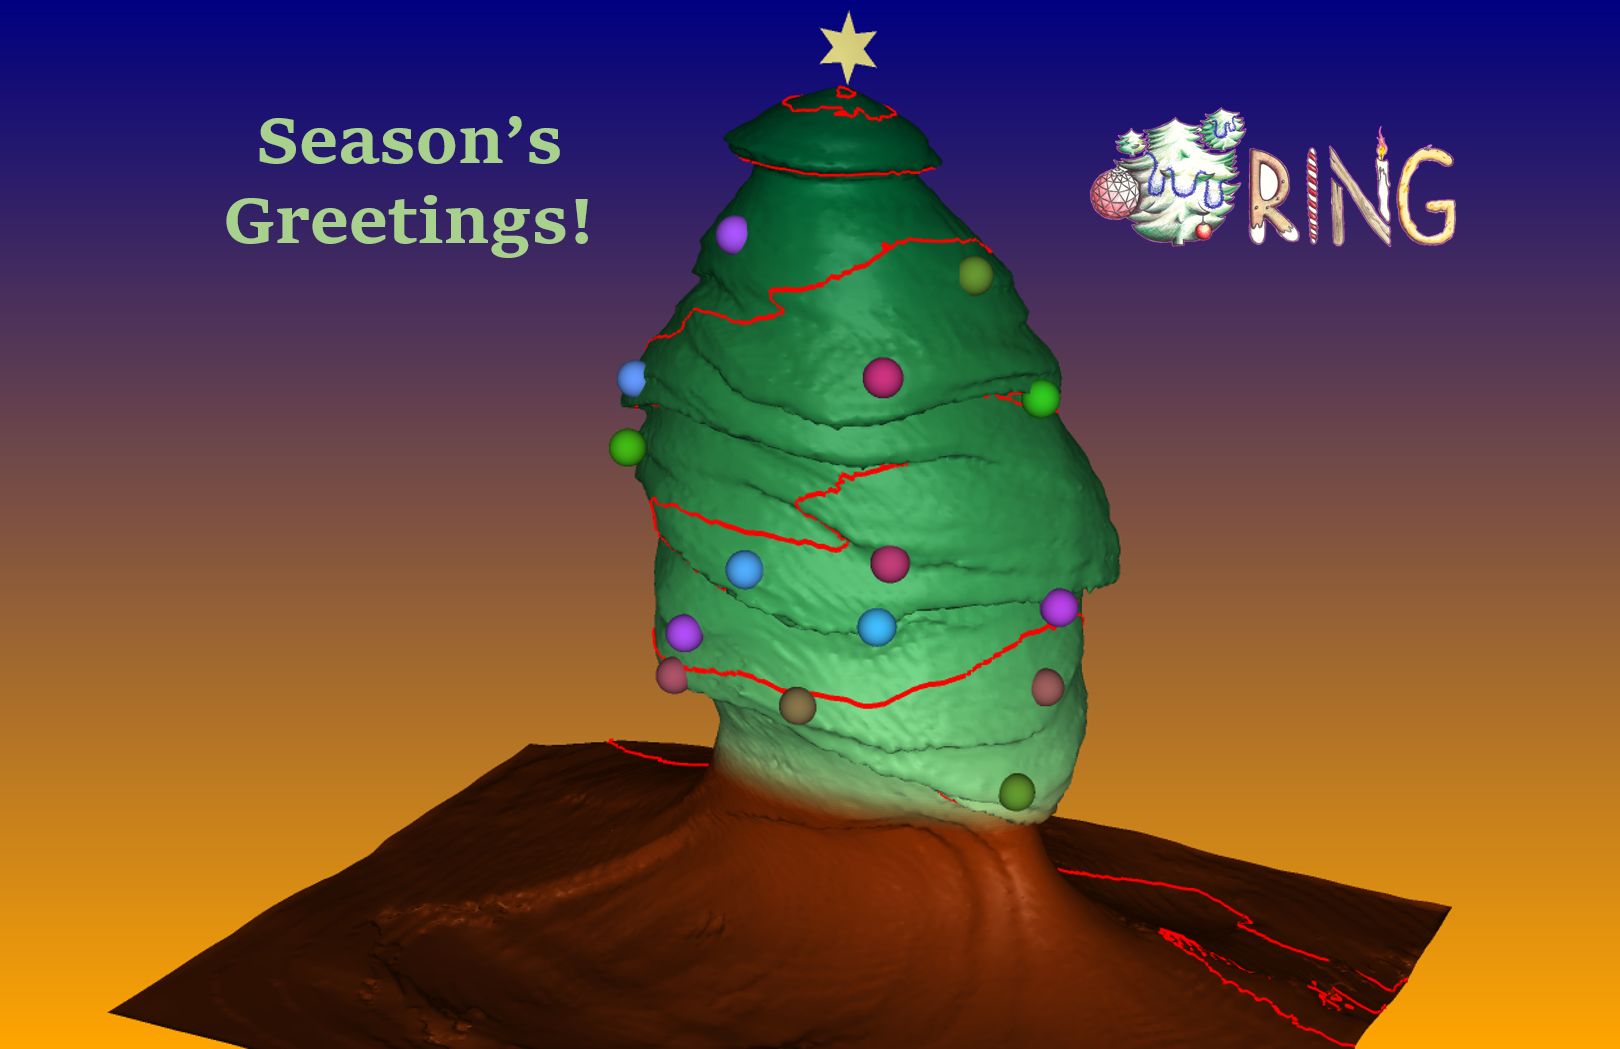 RING's (salt) Chrismas Tree. Happy Holiday Season! 